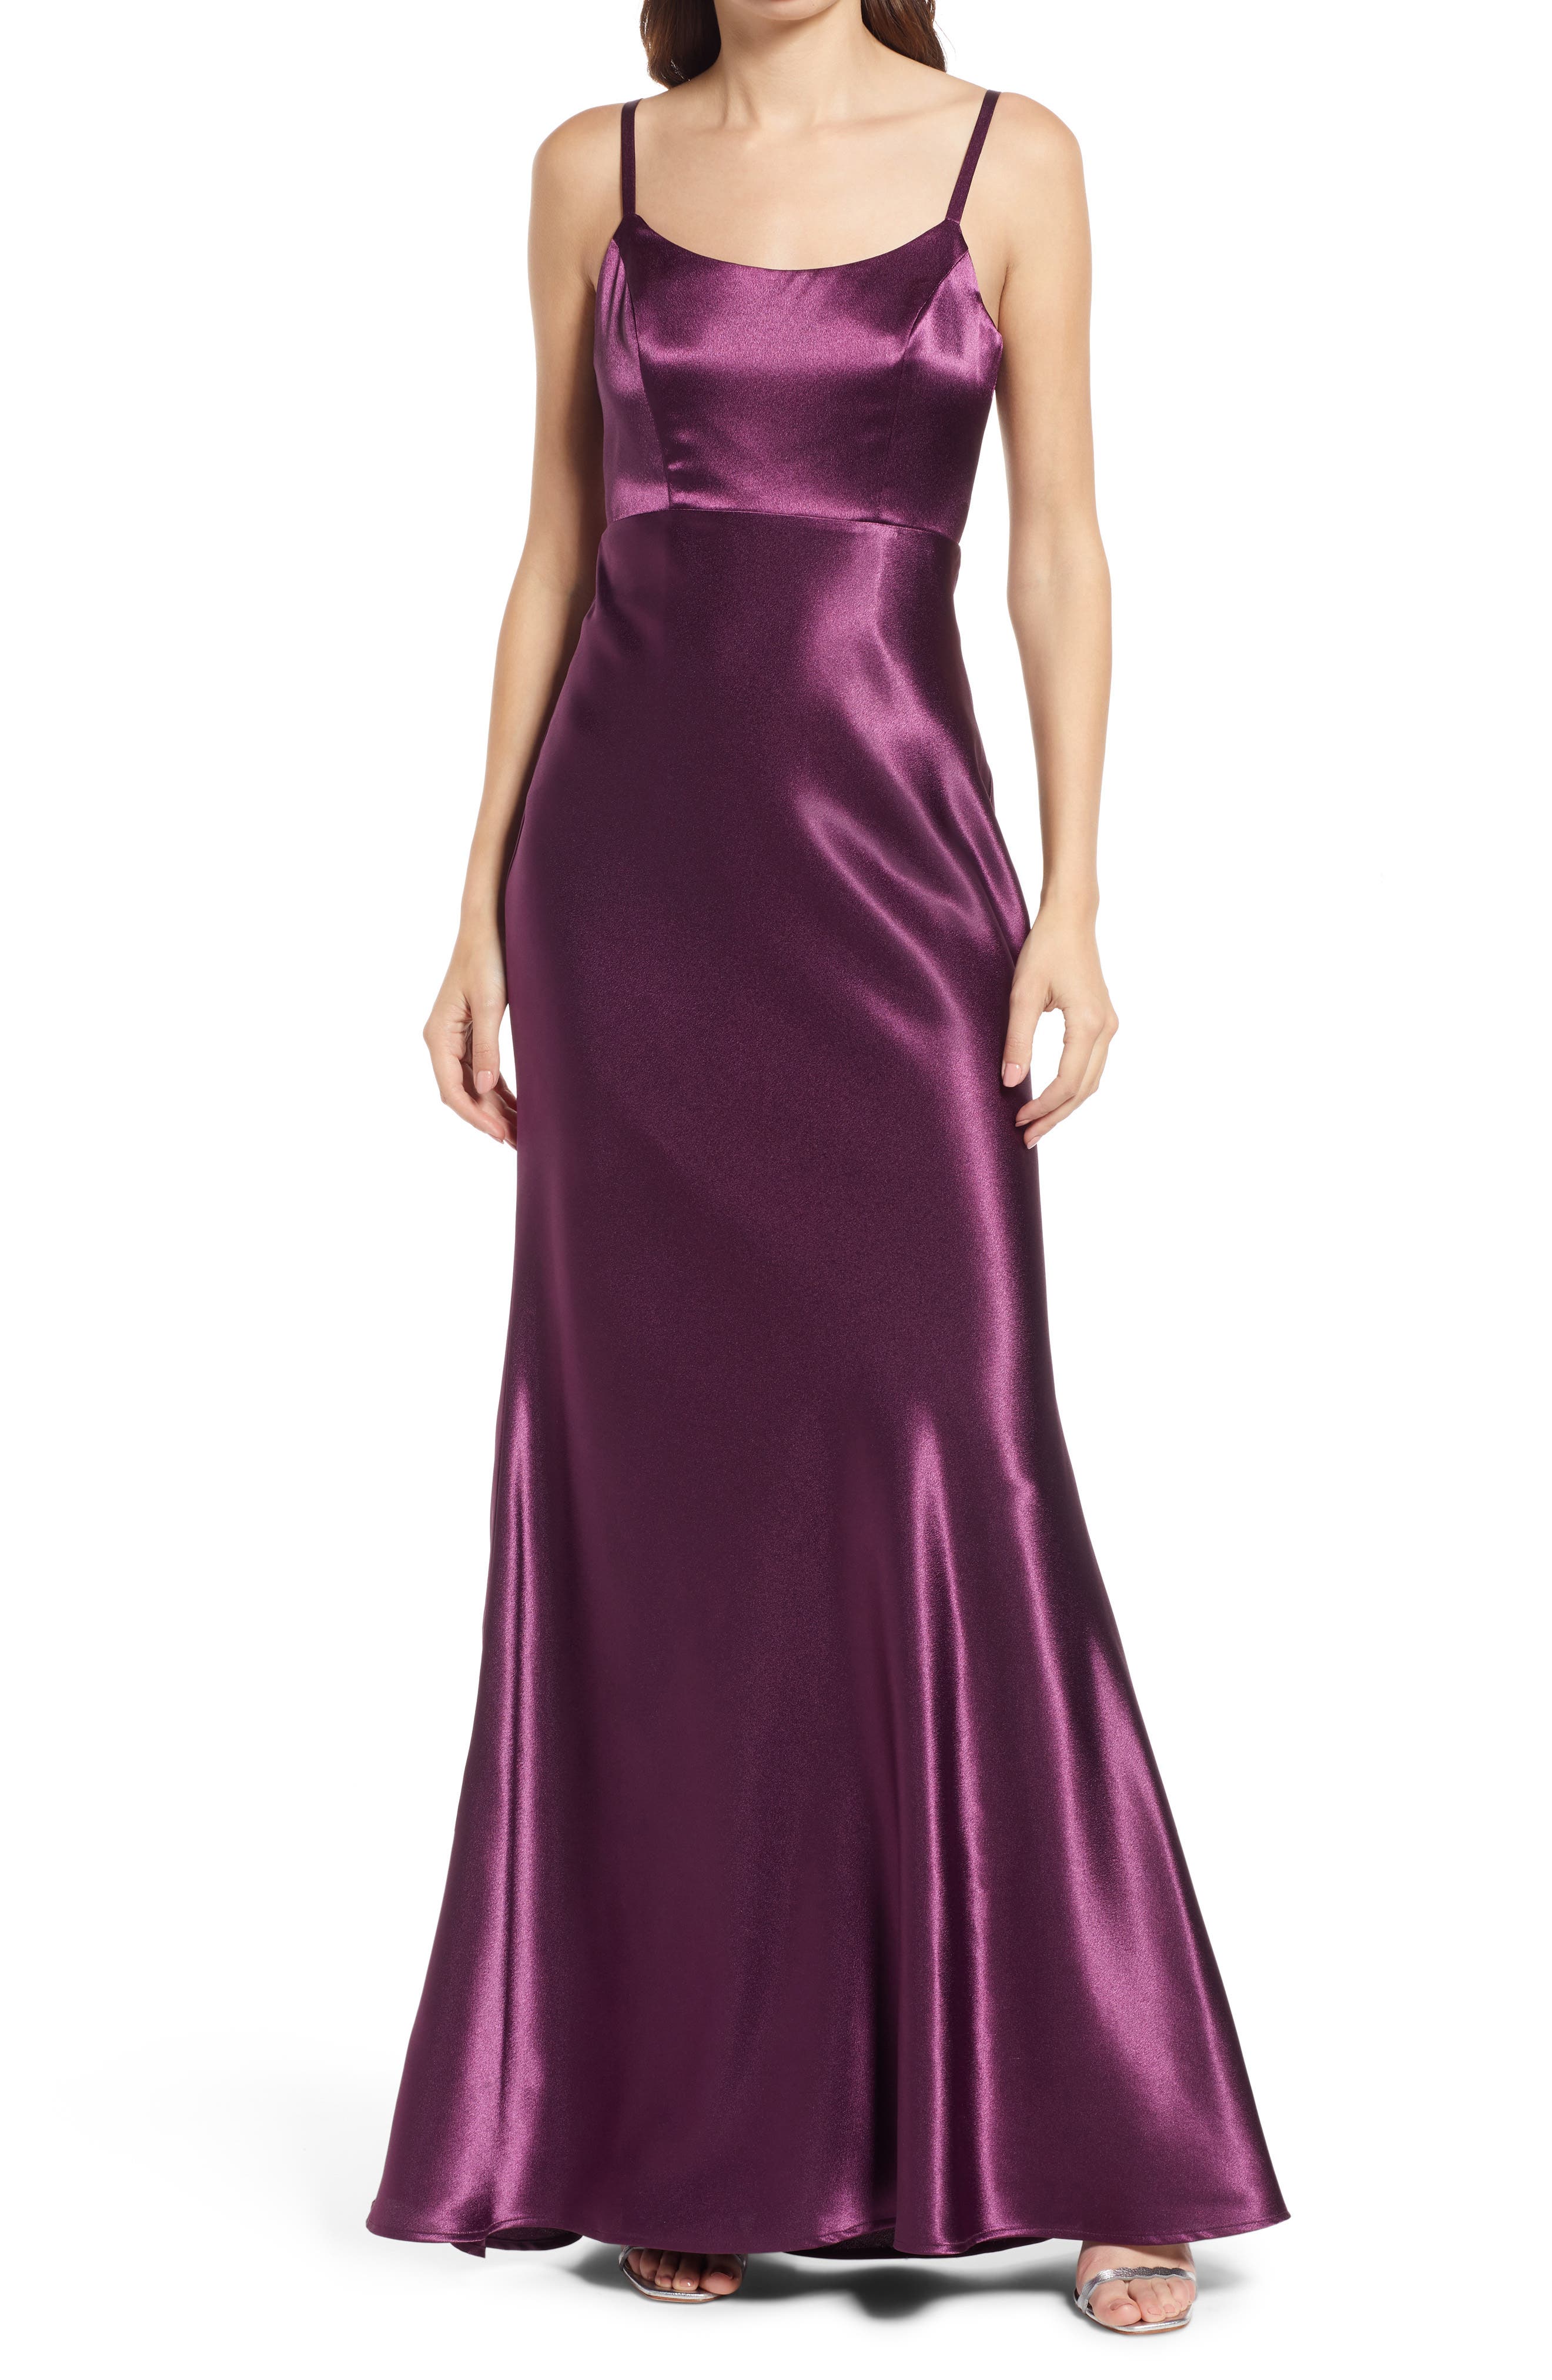 Lulus Make You Shine Satin Evening Dress in Dark Purple